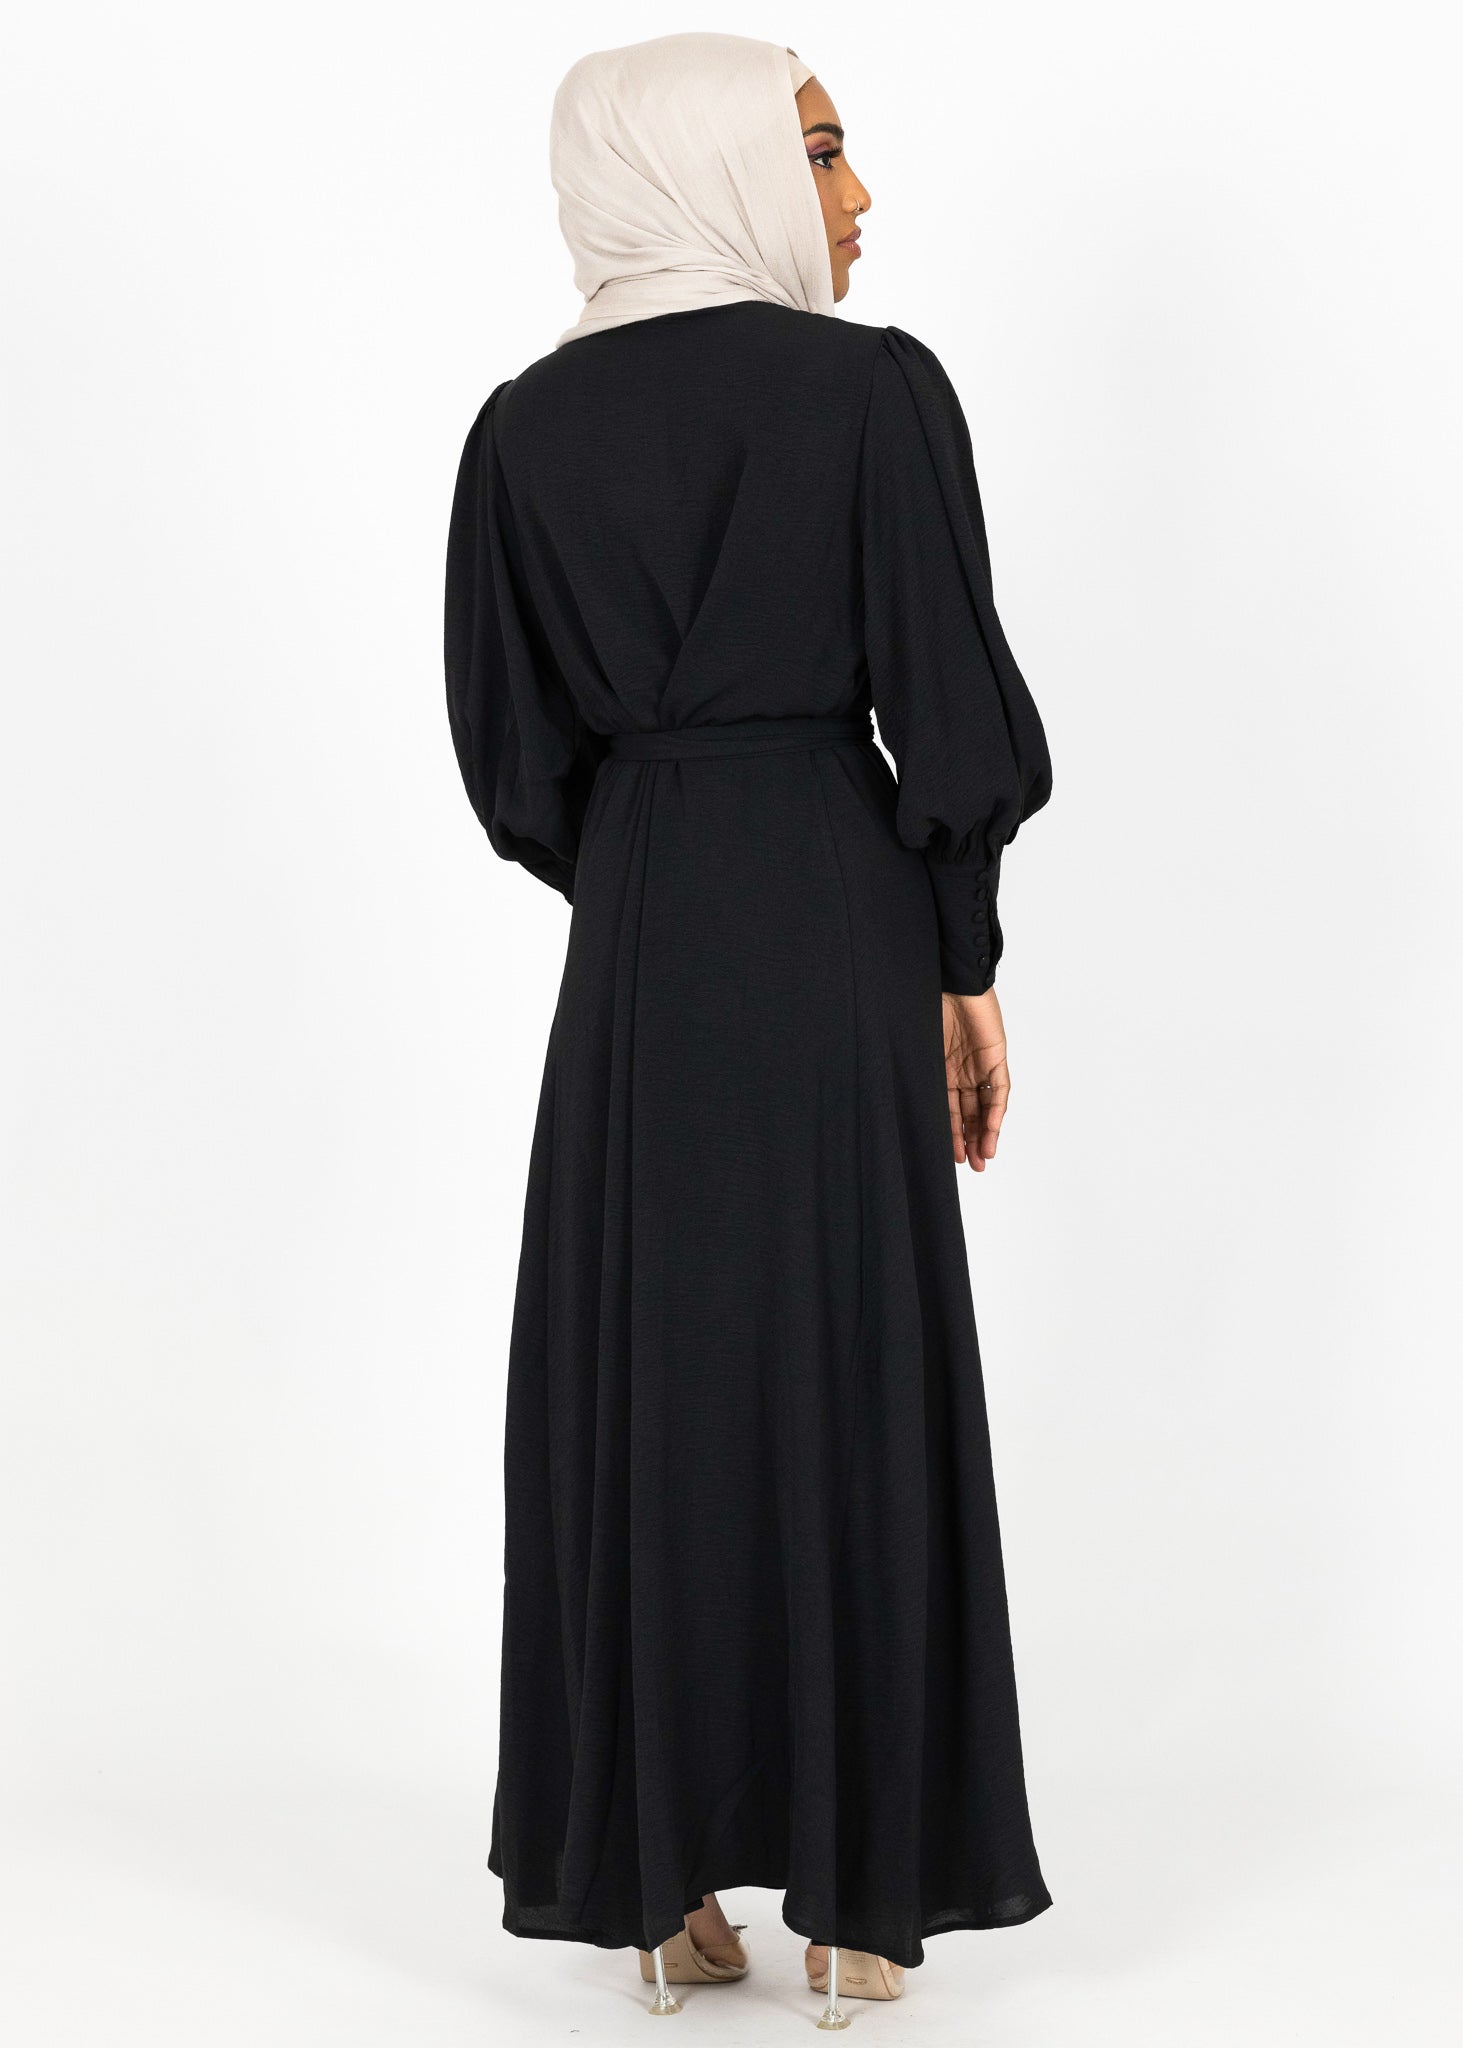 M7971Black-cardigan-dress-abaya